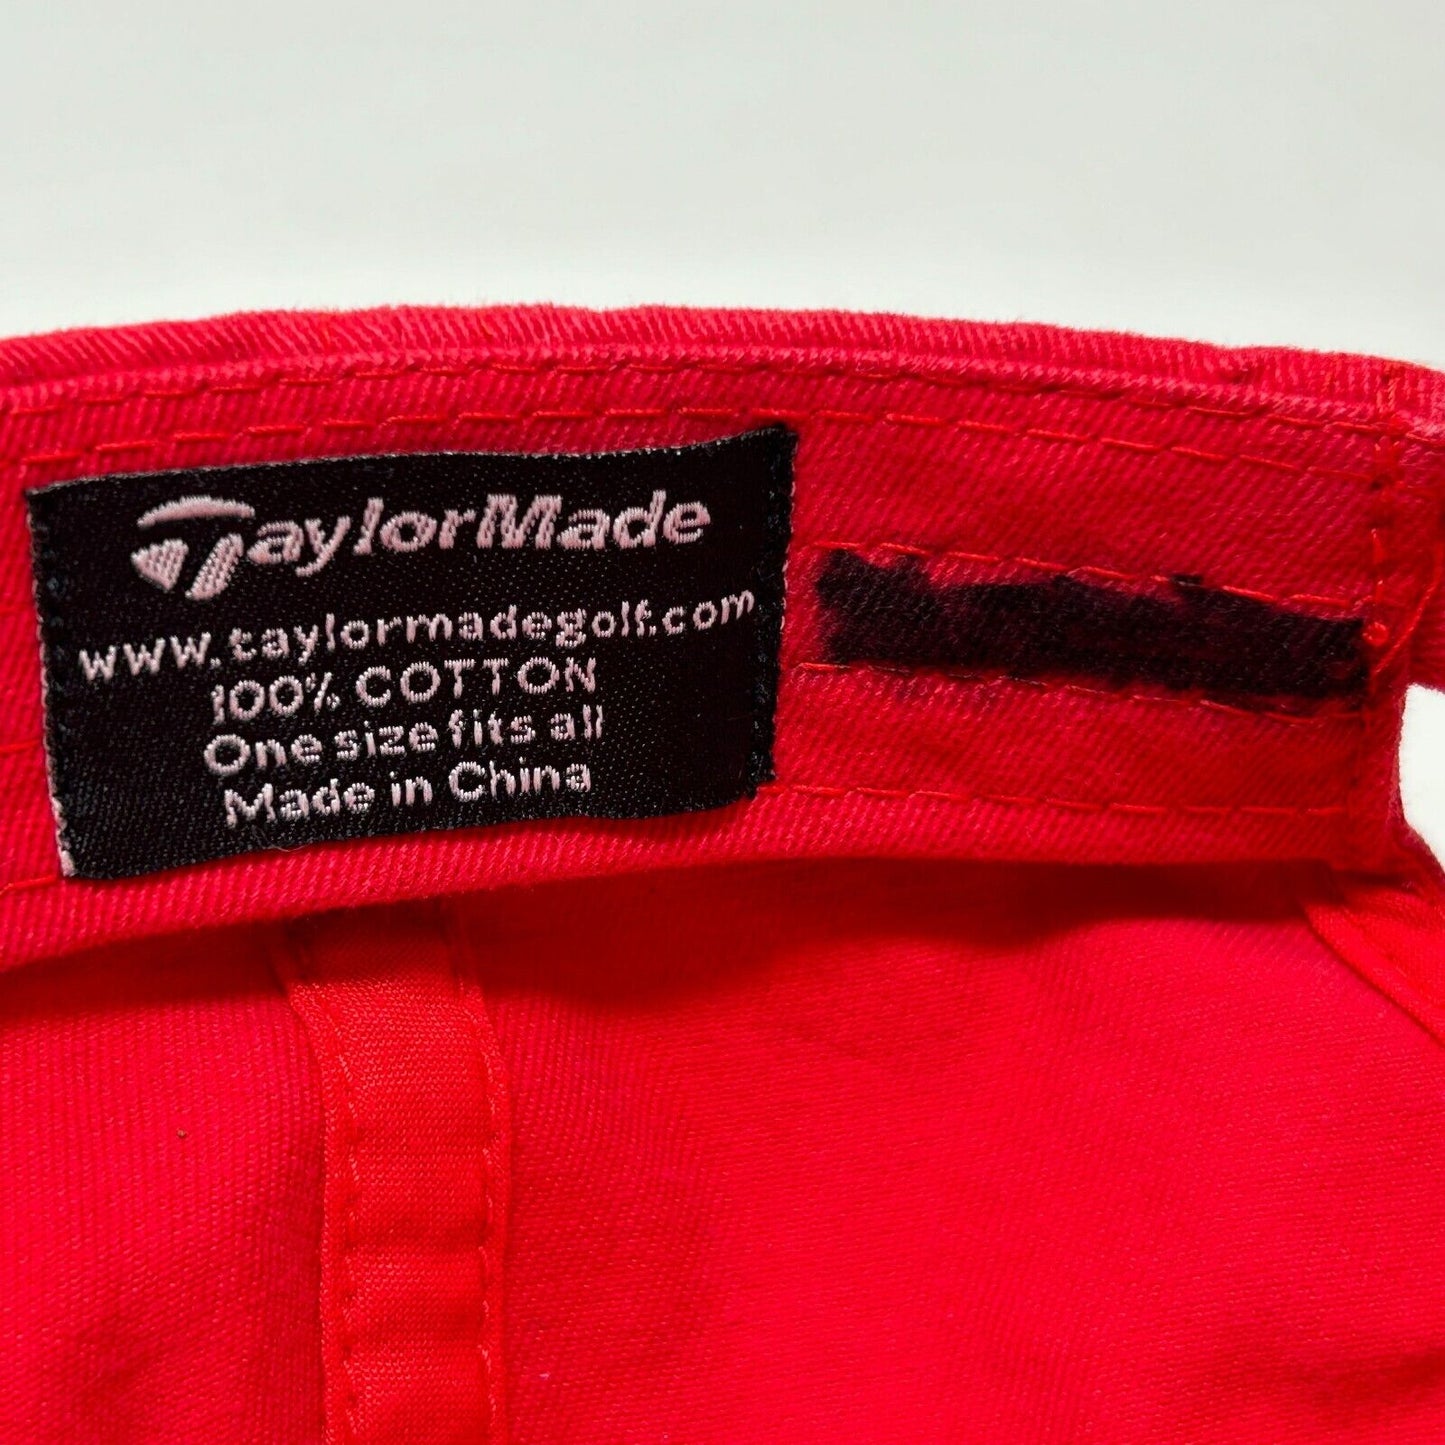 TaylorMade Dad Hat Red Golf Golfer Golfing Six Panel Strapback Baseball Cap